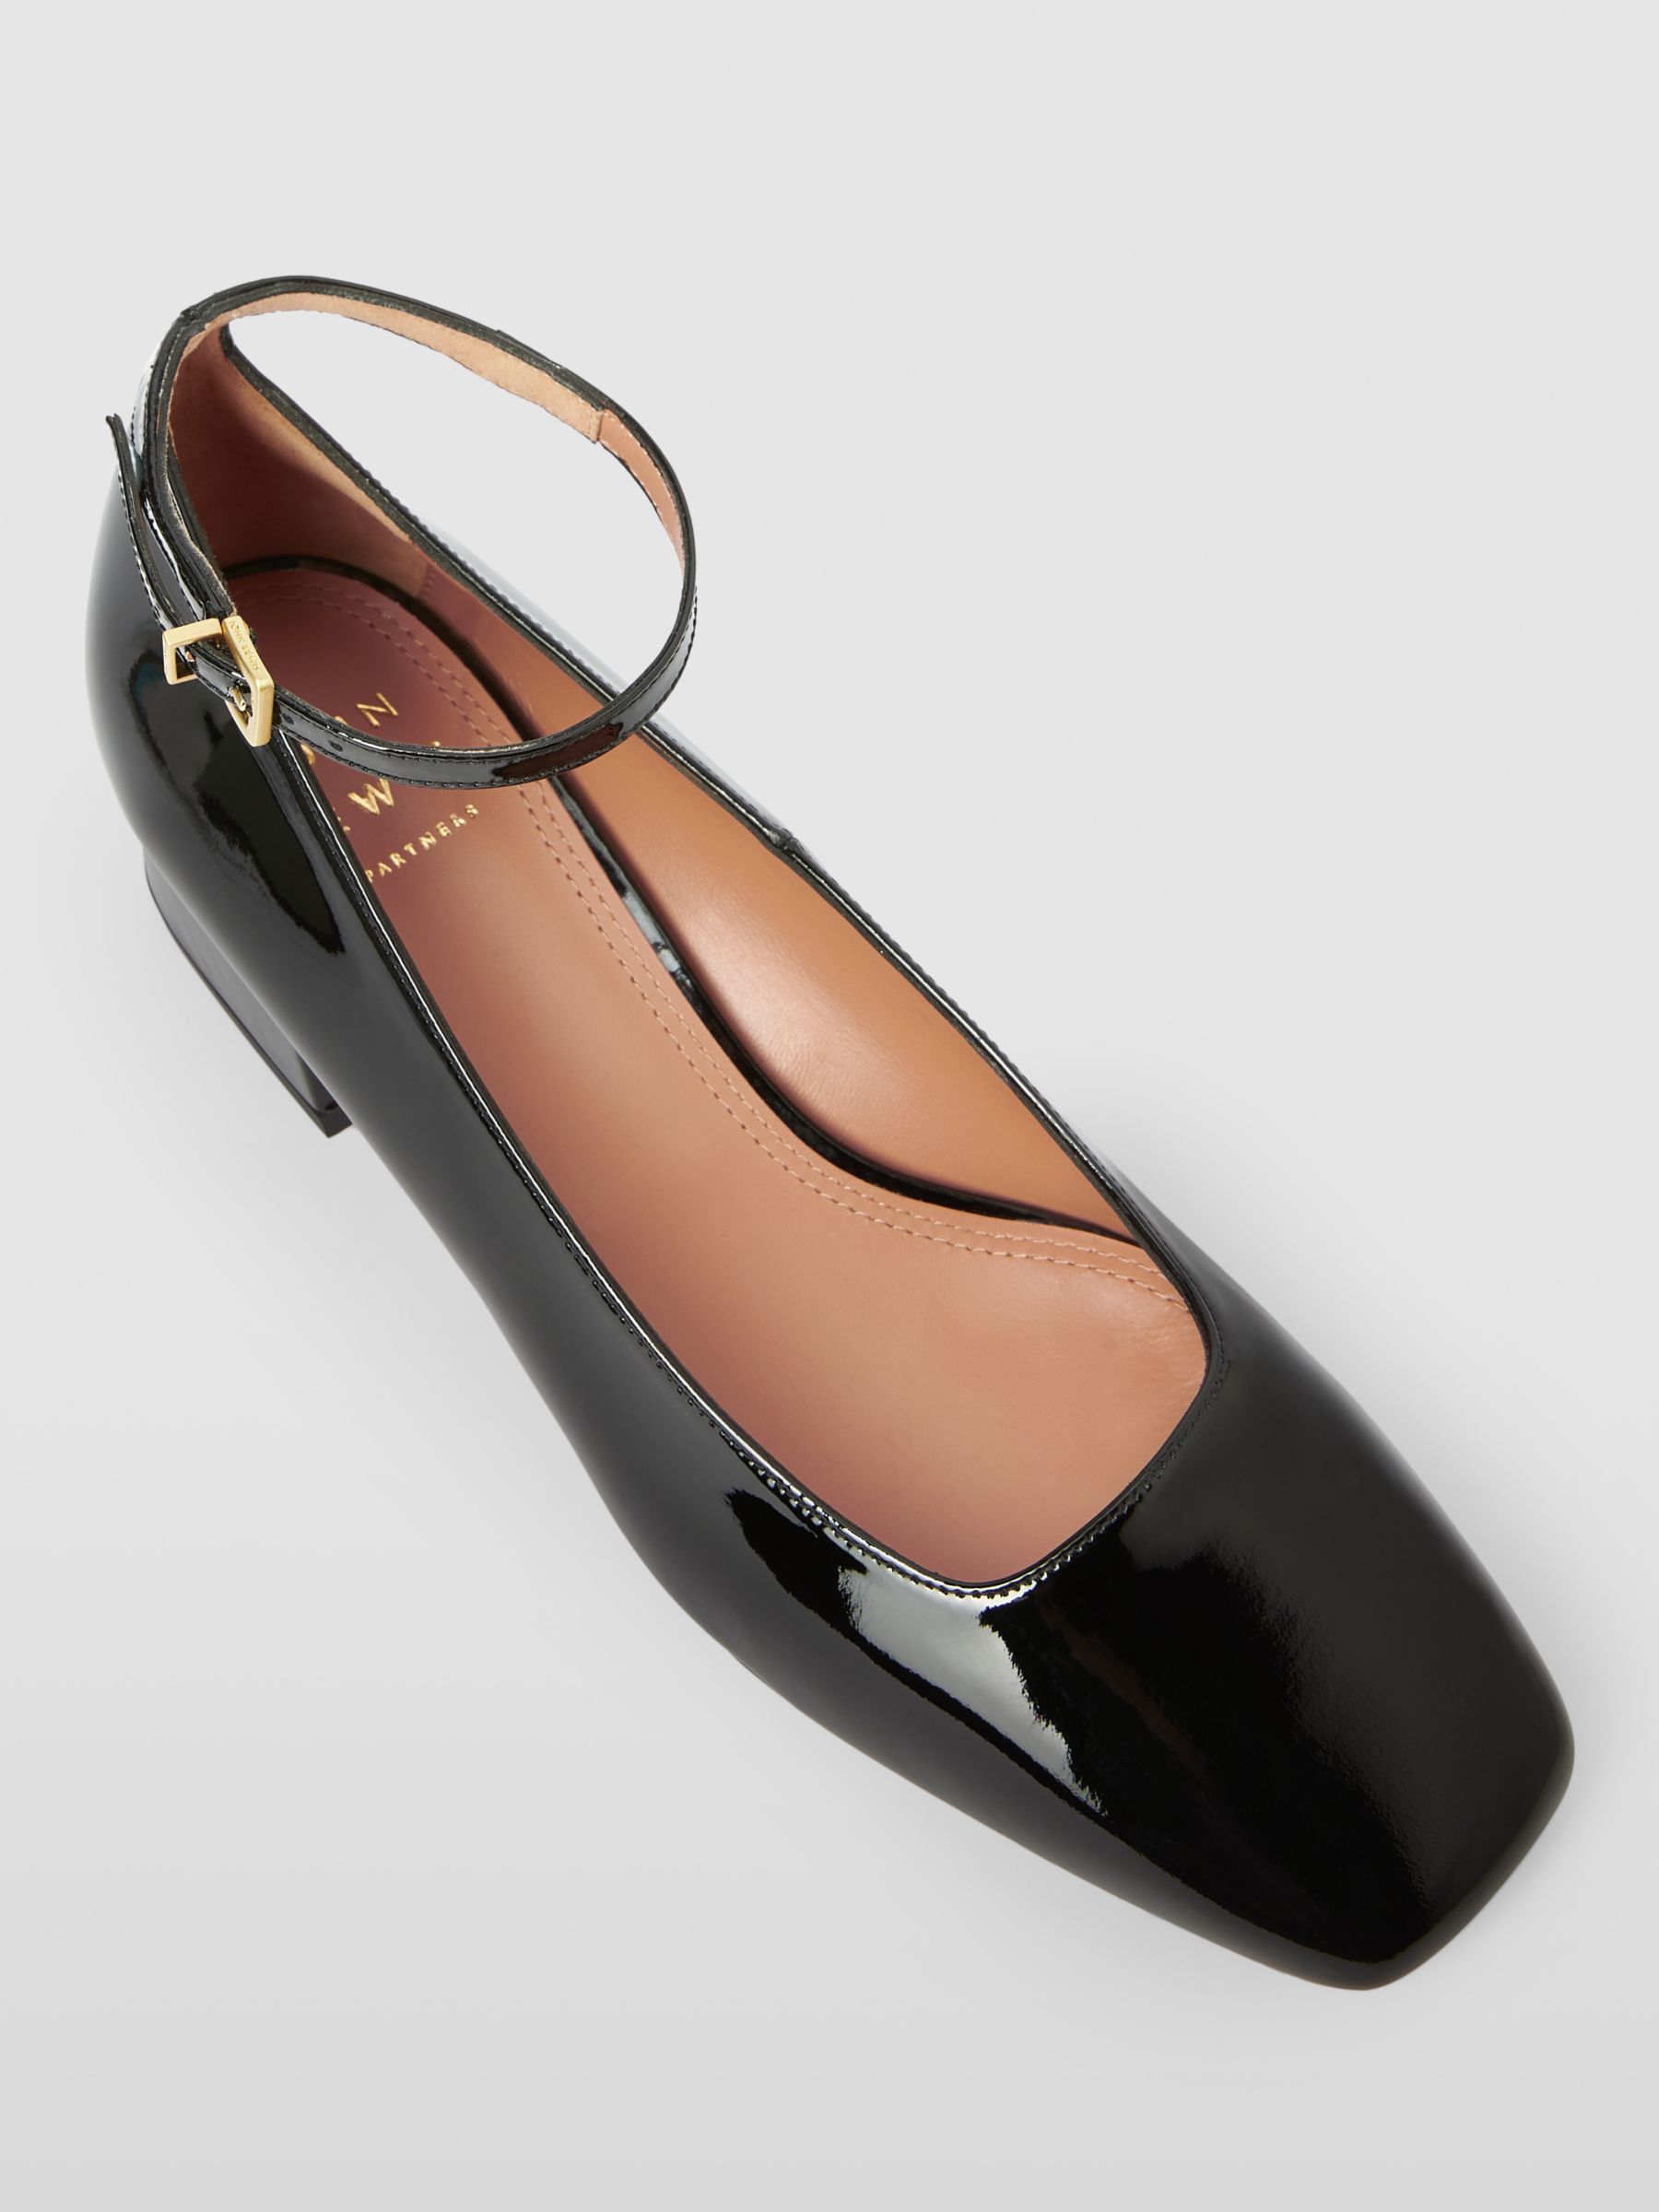 John Lewis Adorn Patent Leather Court Shoes, Black, 8